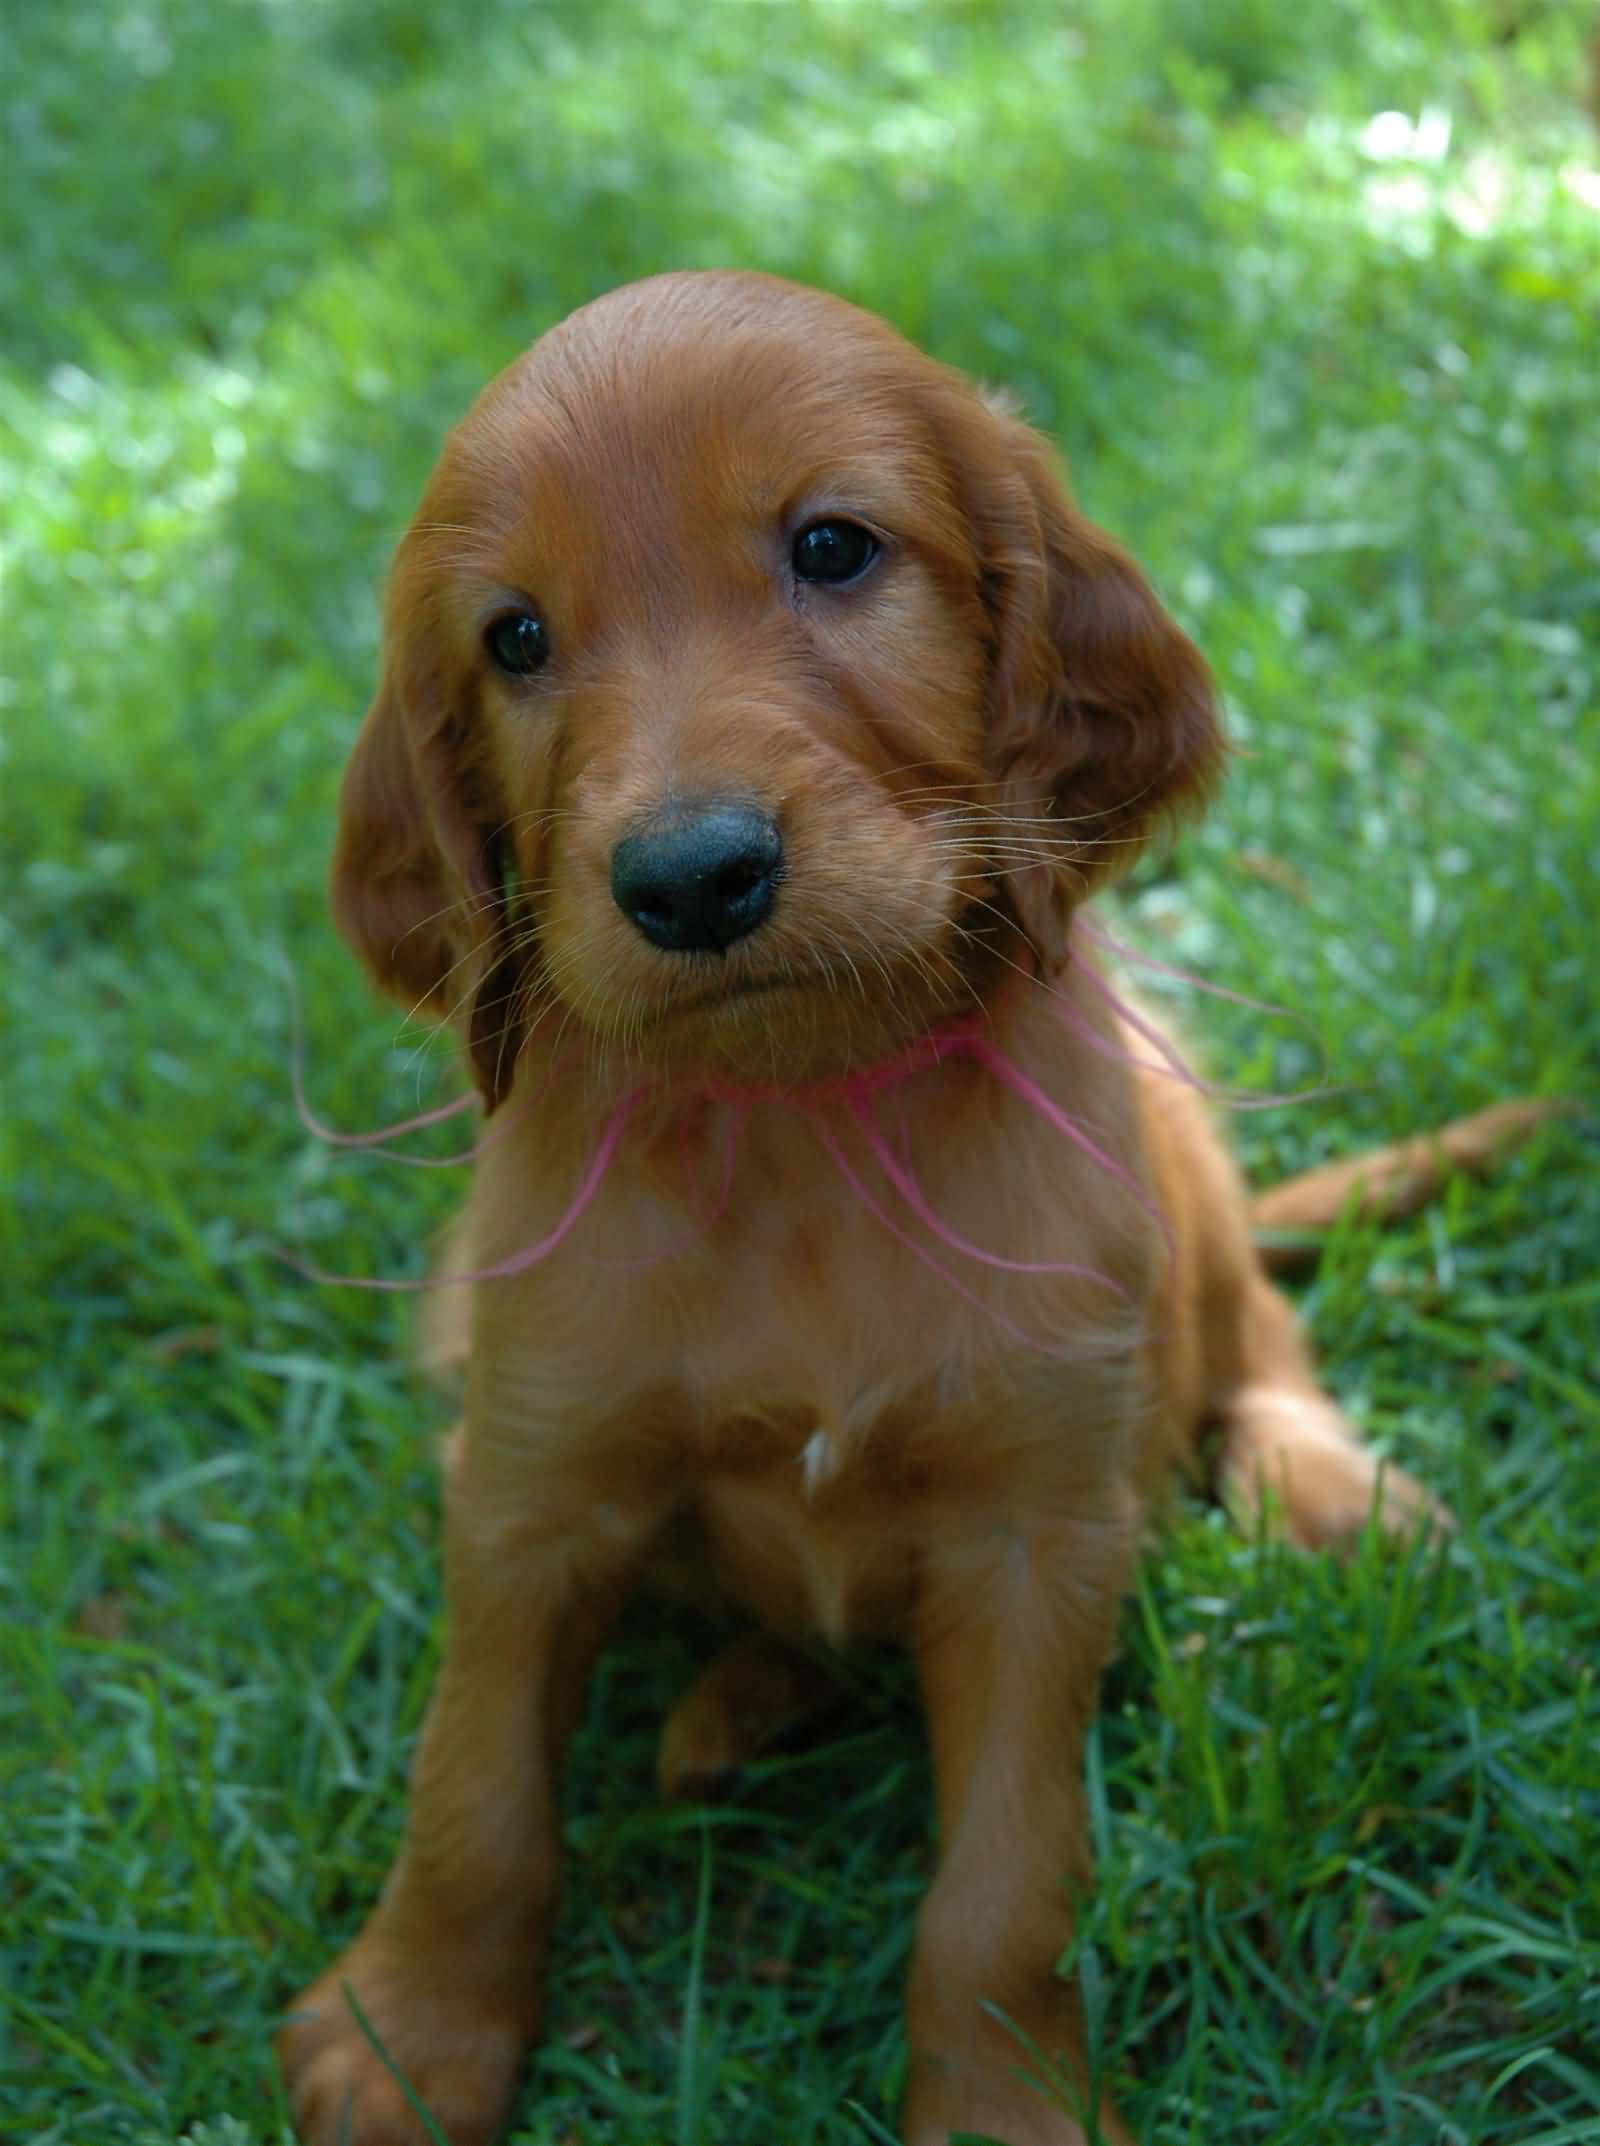 Cute Little Irish Setter Puppy Sitting On Grass